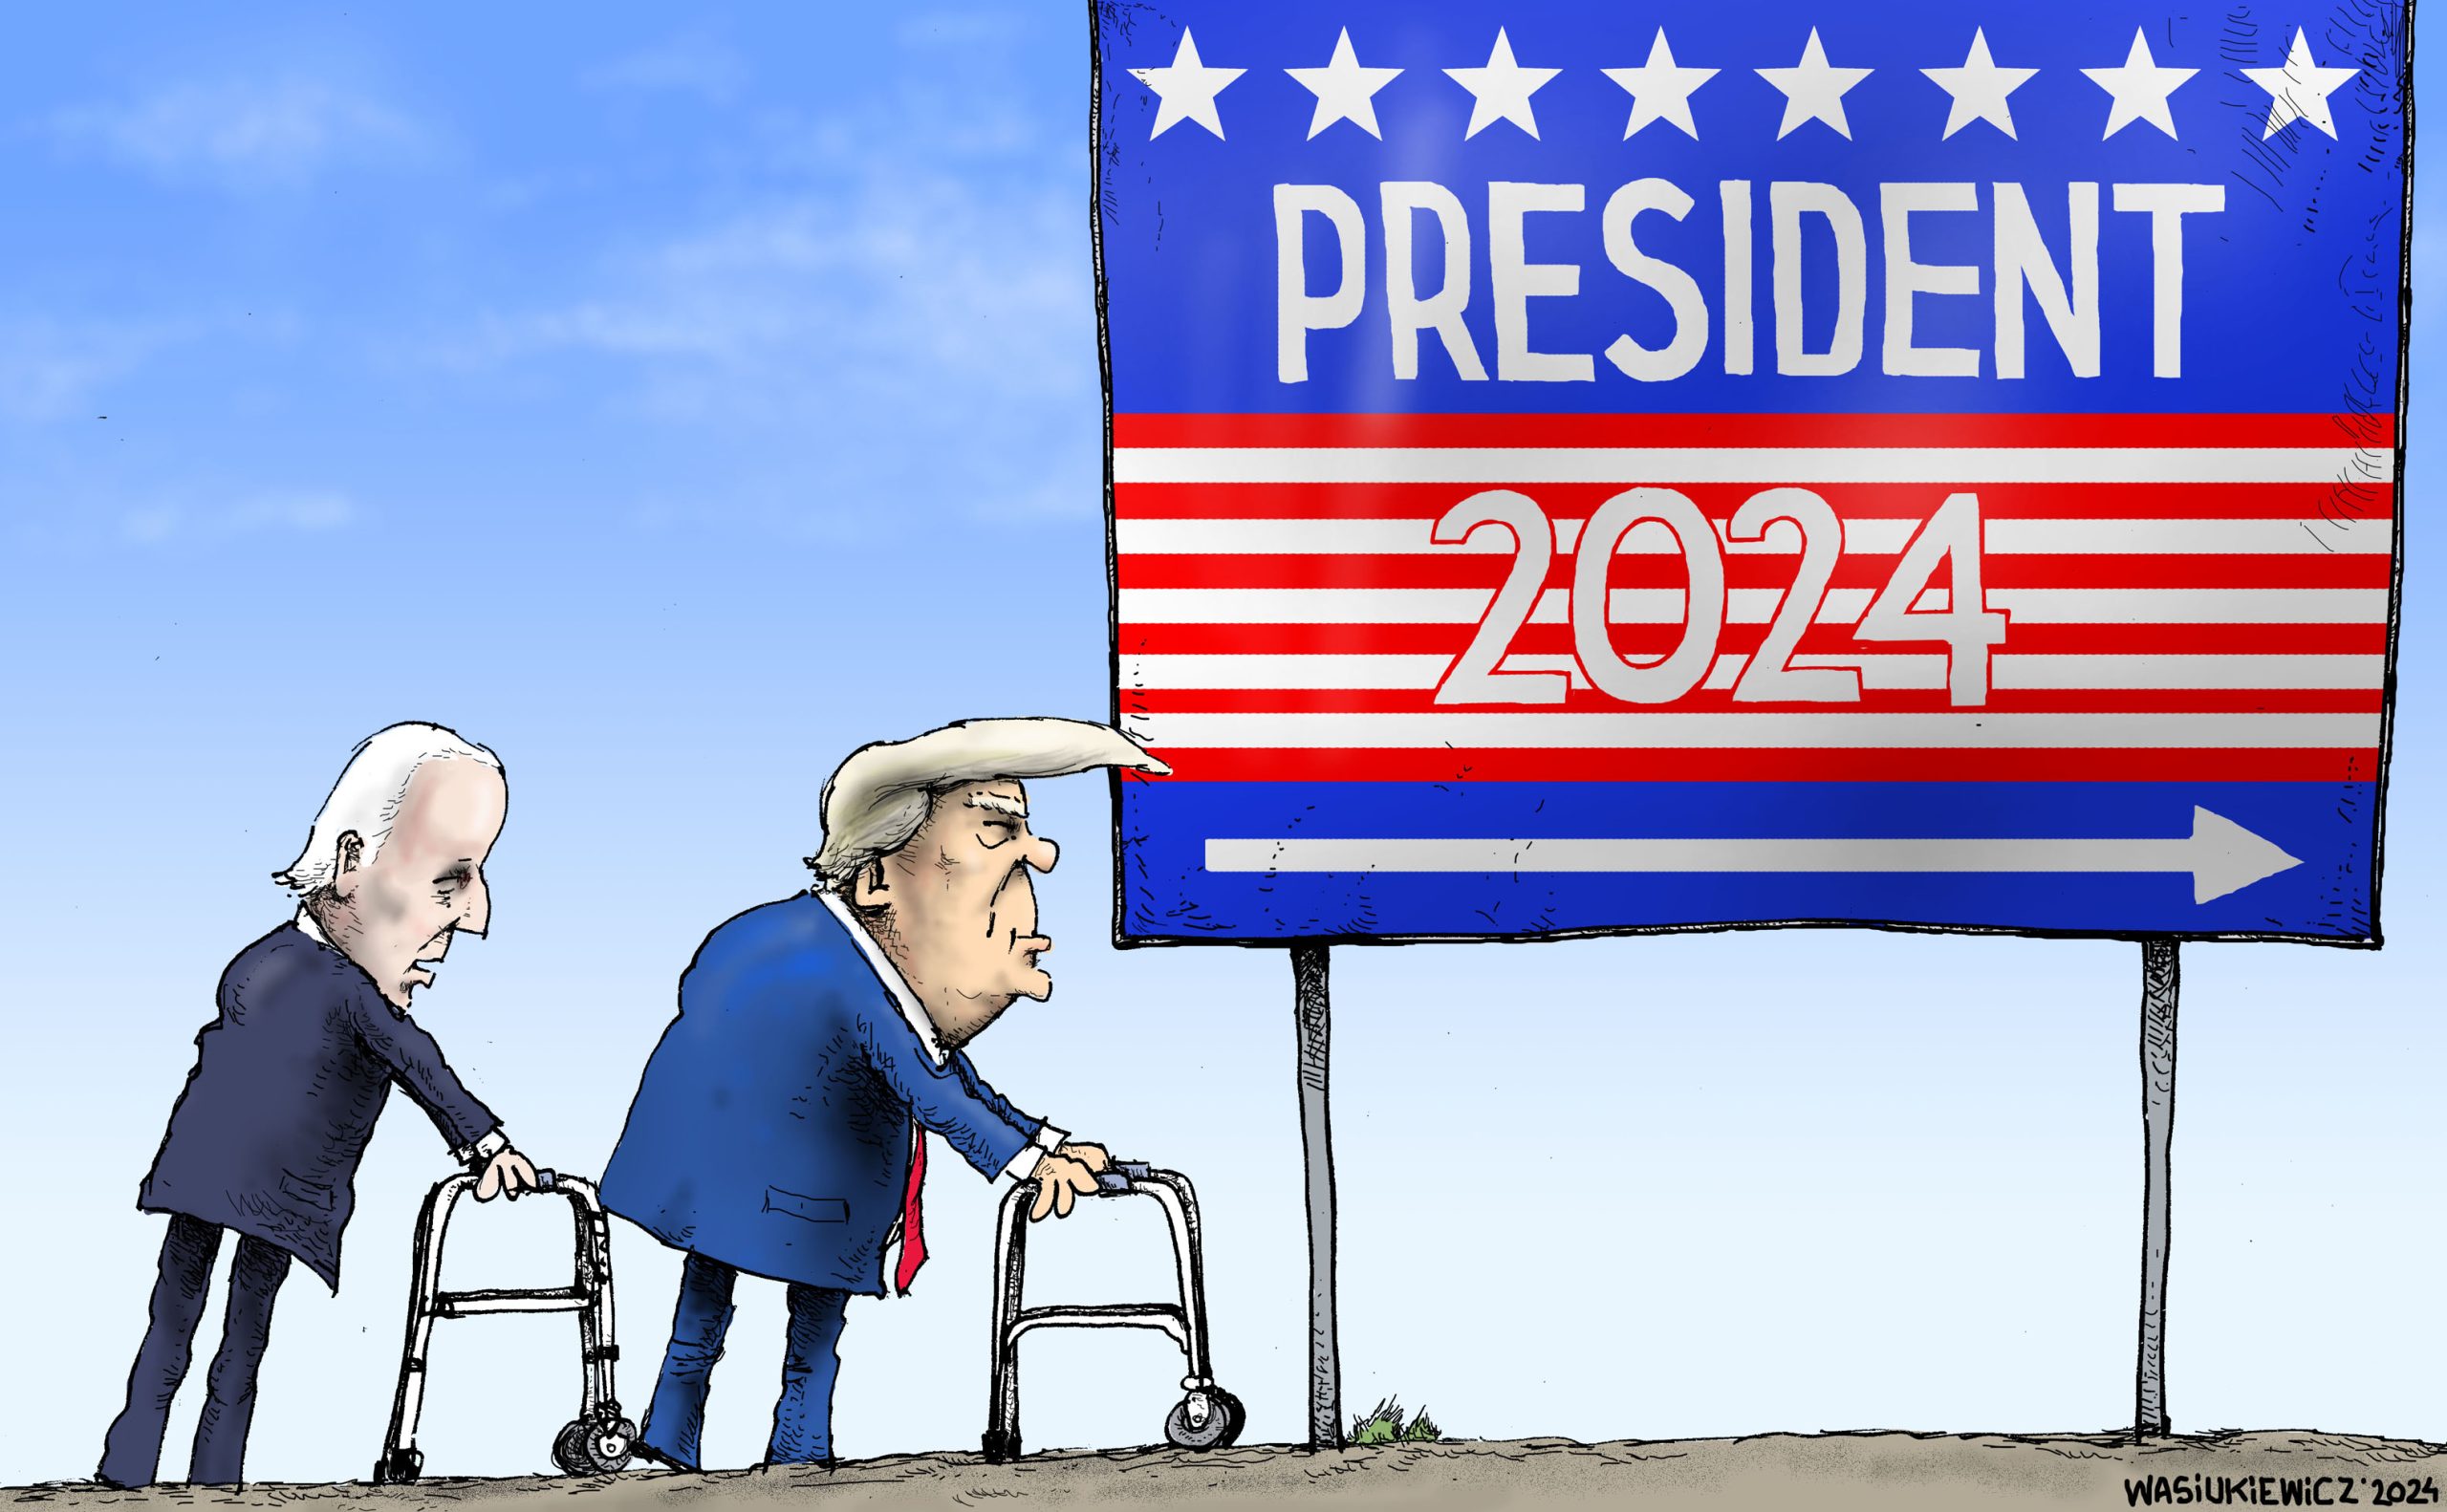 Biden and Trump “racing” toward the 2024 elections